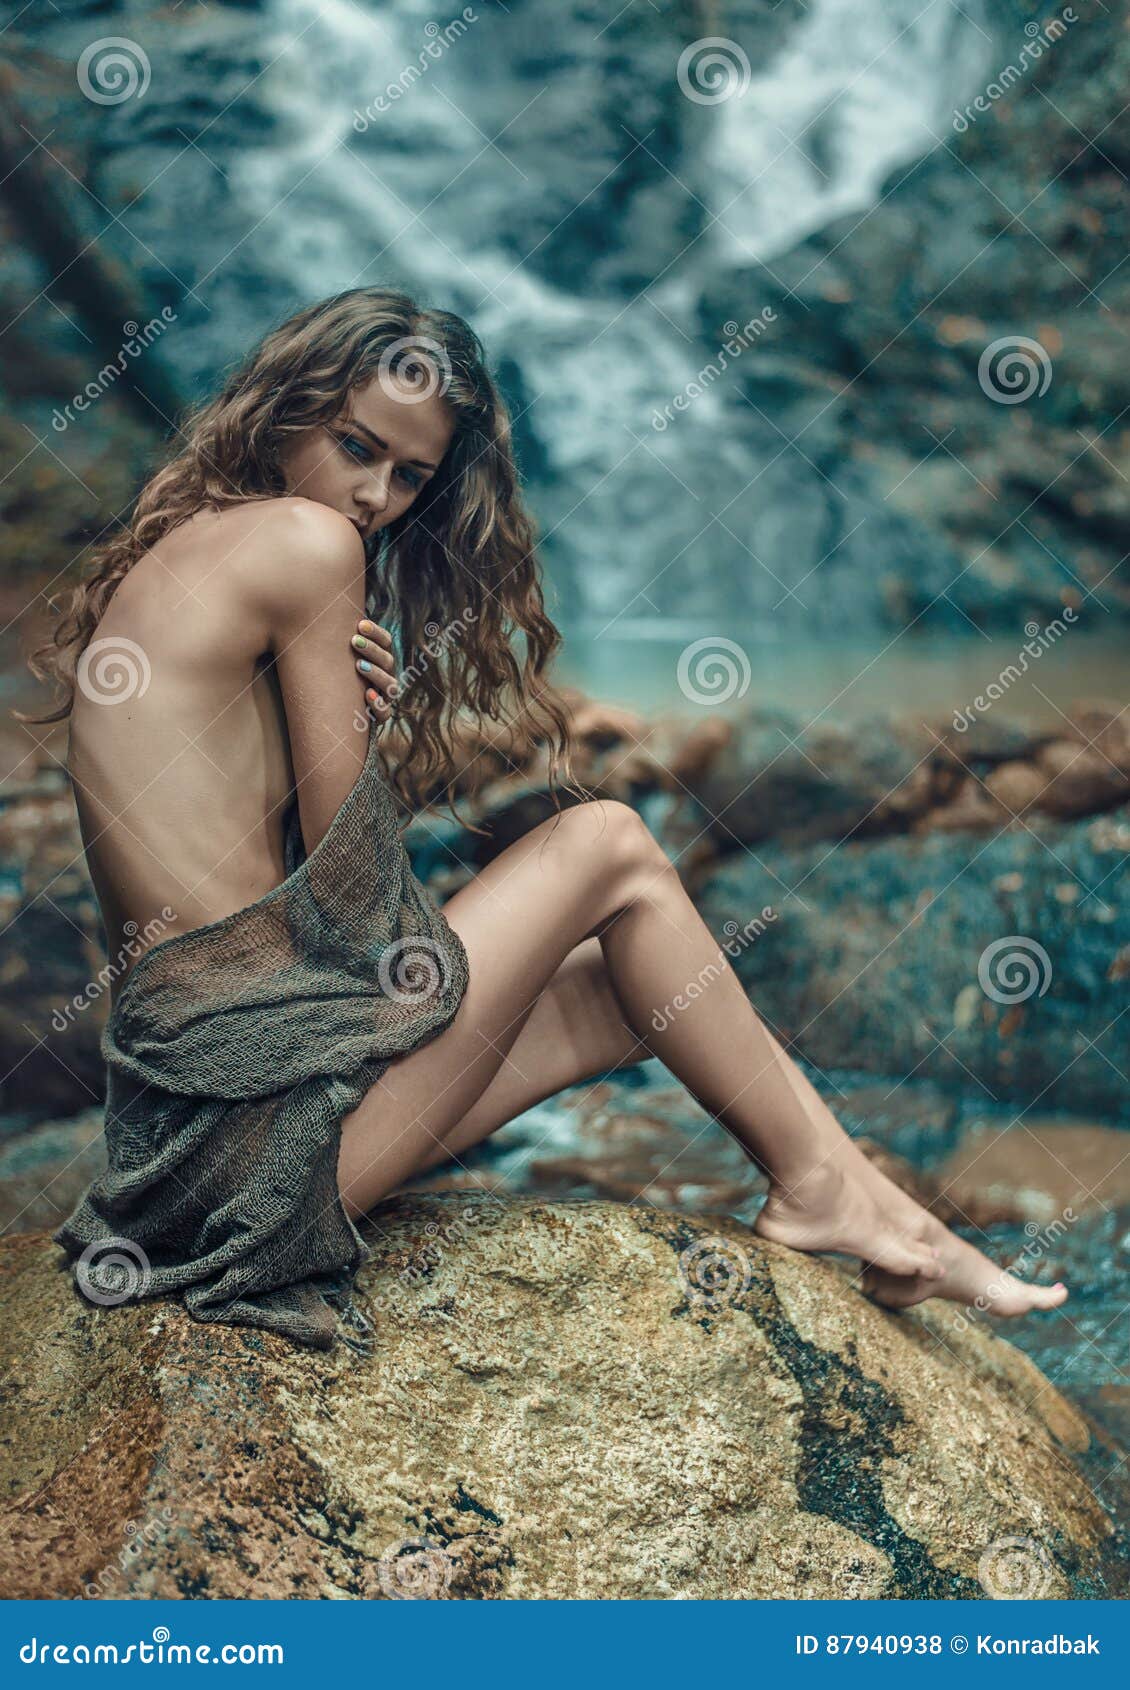 innocent lady resting on the sharp rock